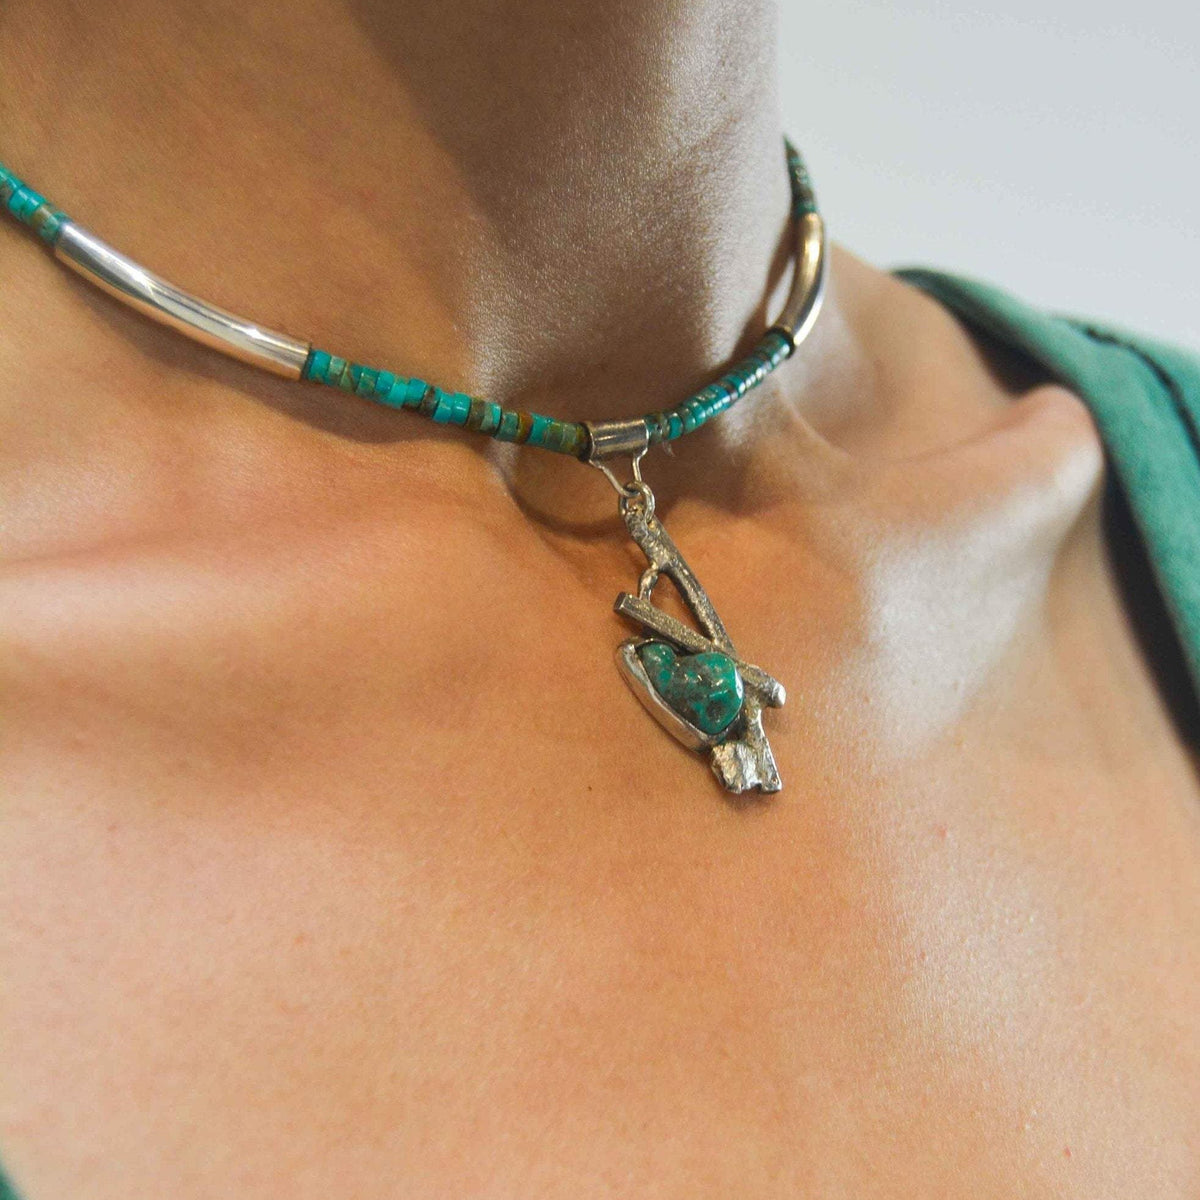 Natural organic turquoise jewelry choker